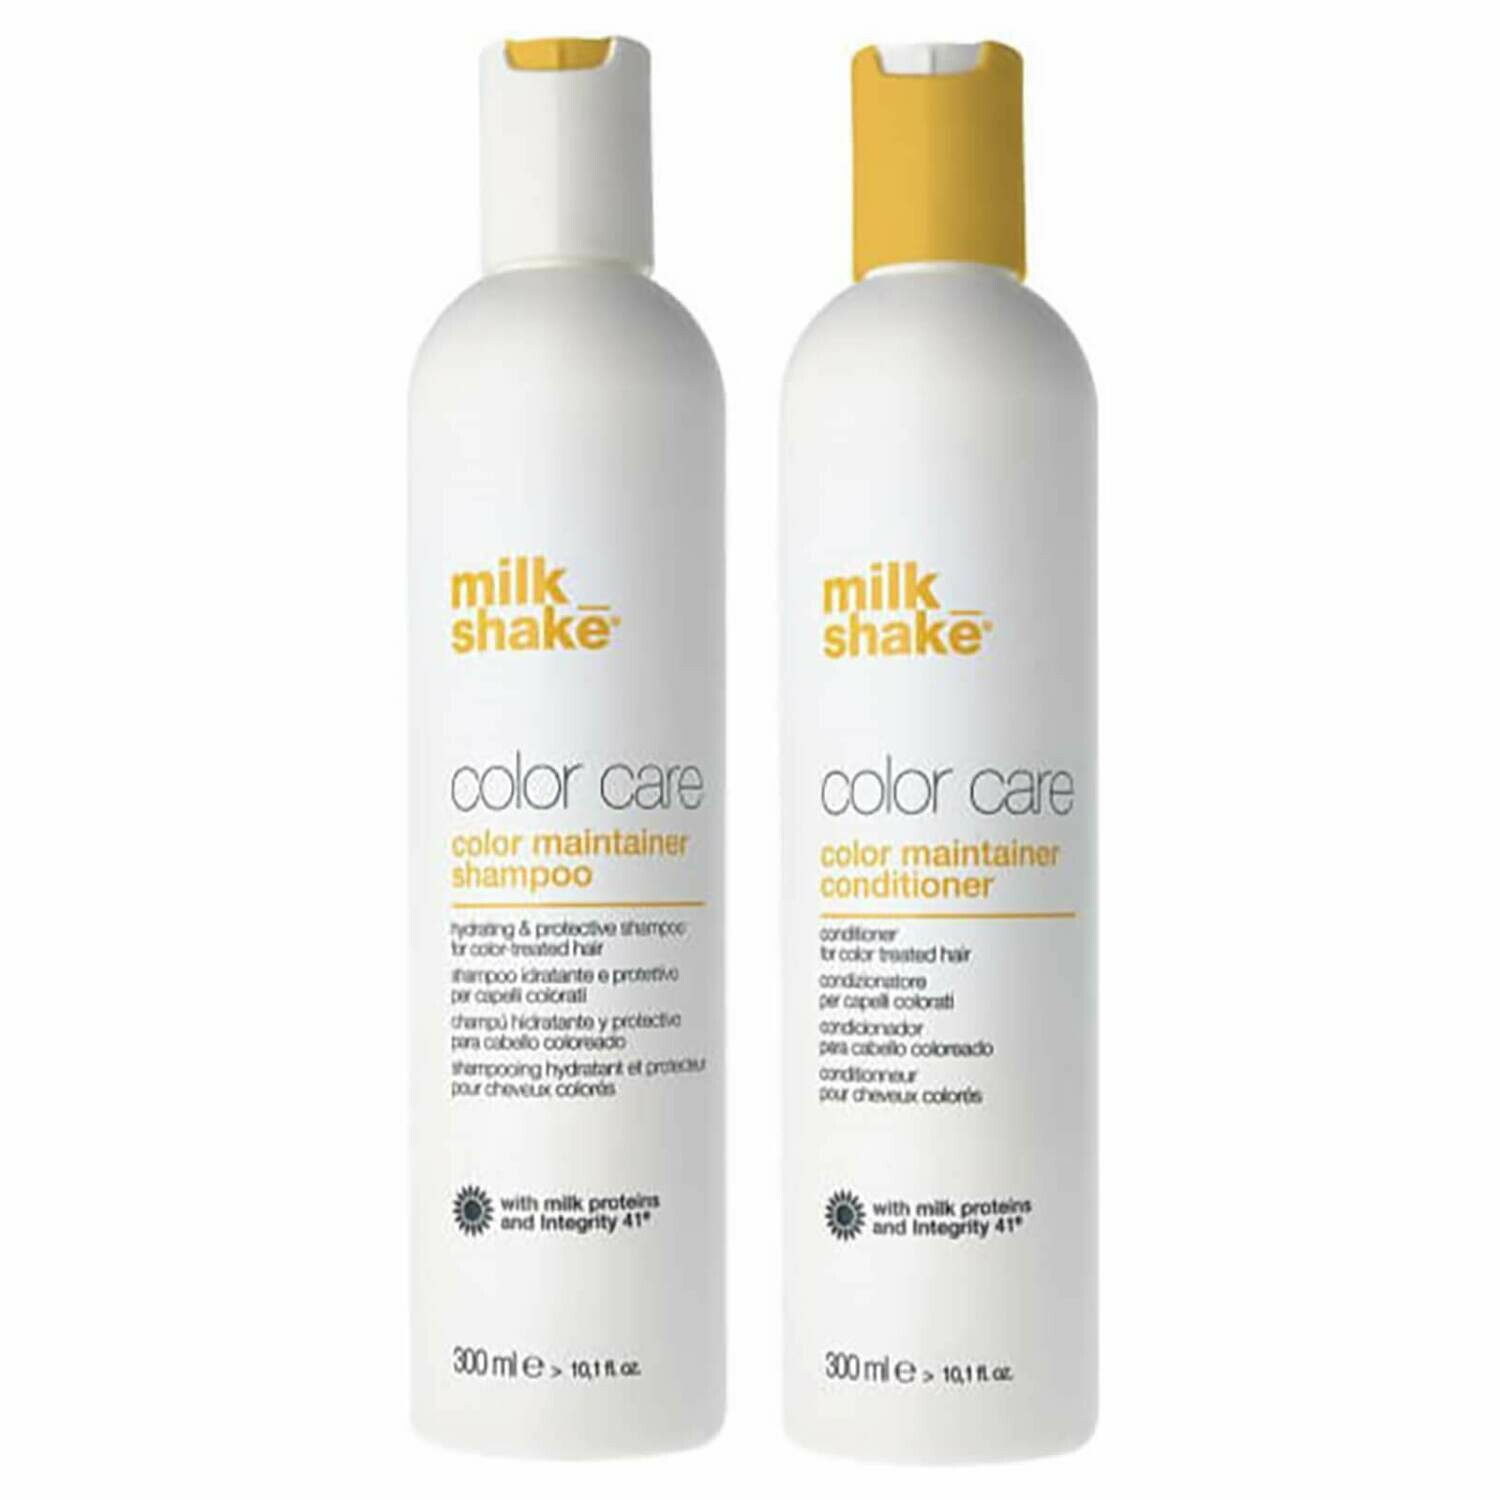 Color Care Shampoo & Conditioner Duo kit.